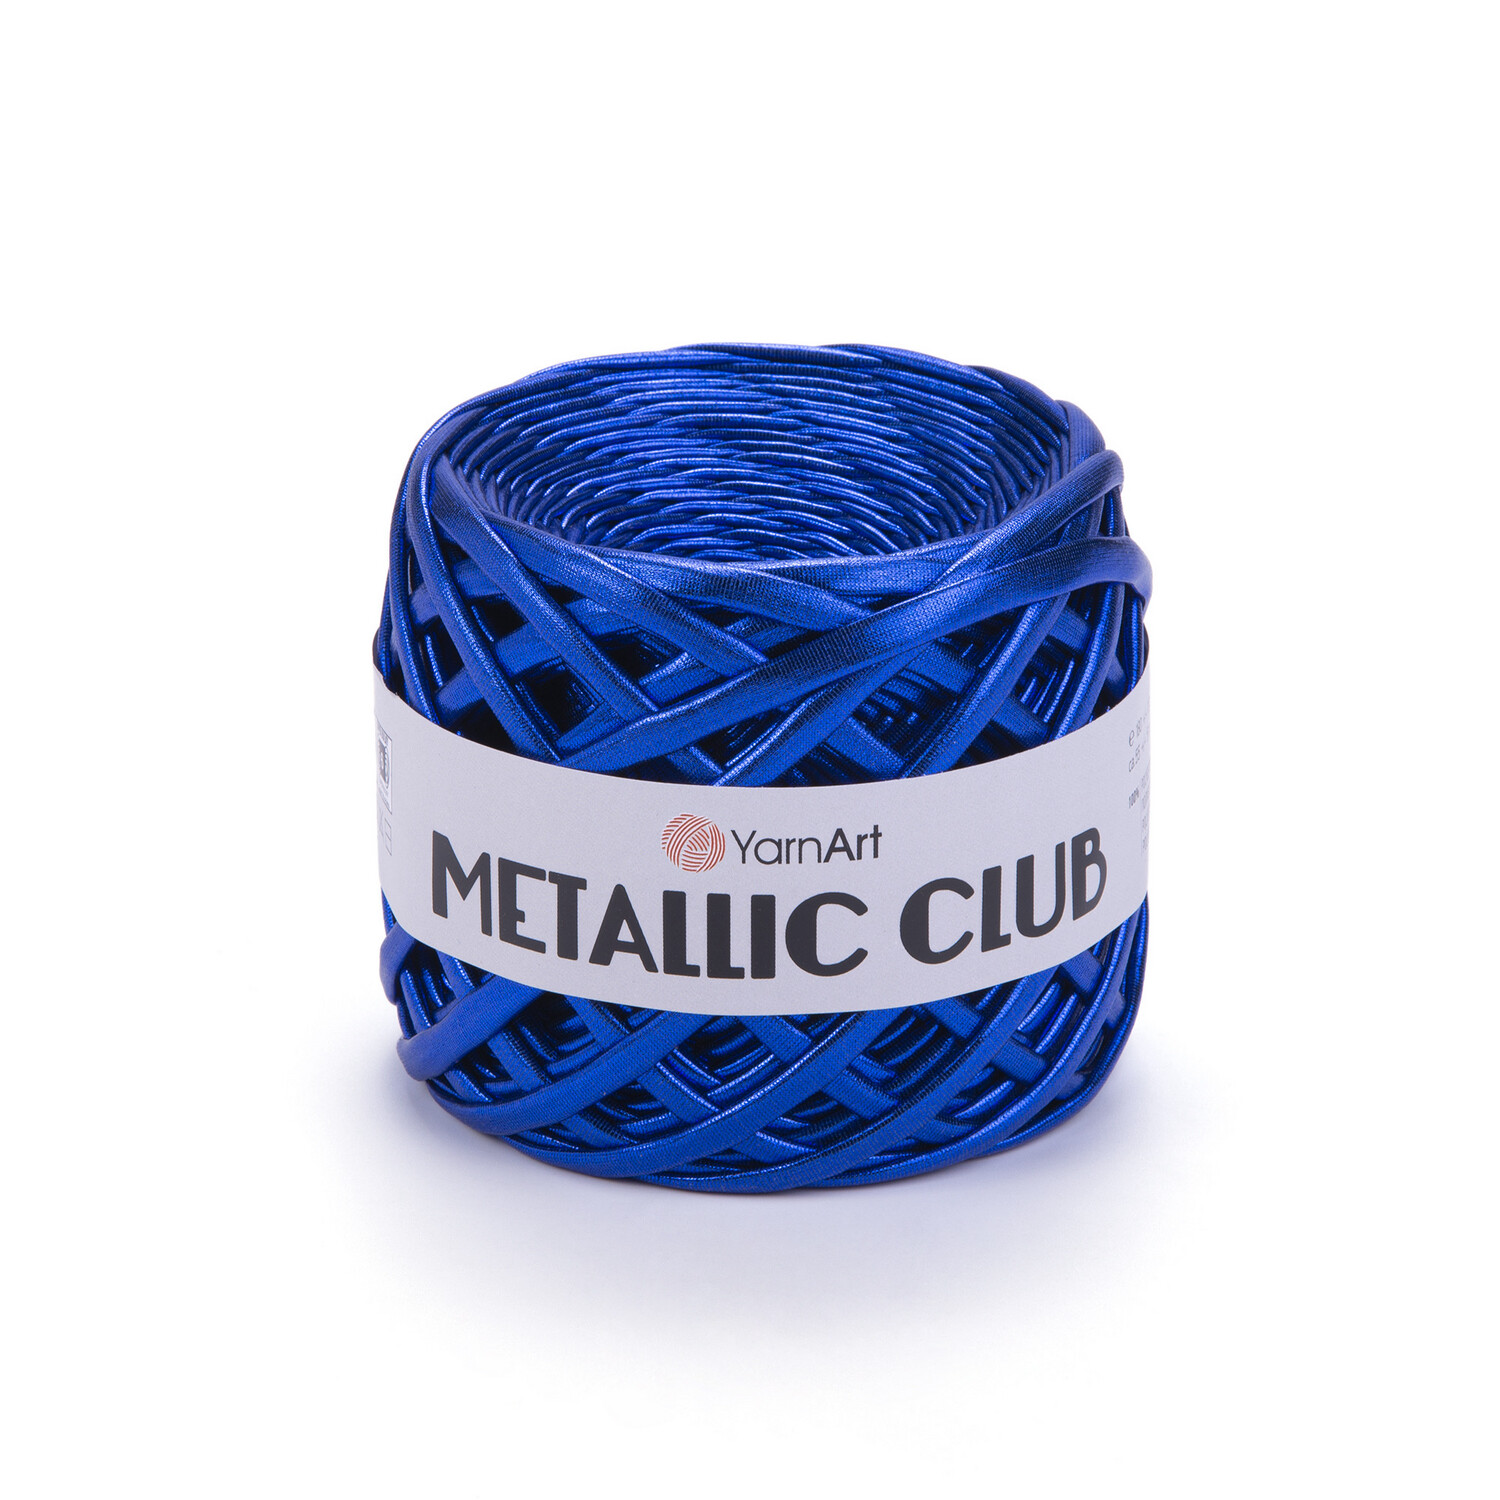 YarnArt Metallic Club - 8118 Saxe Blue